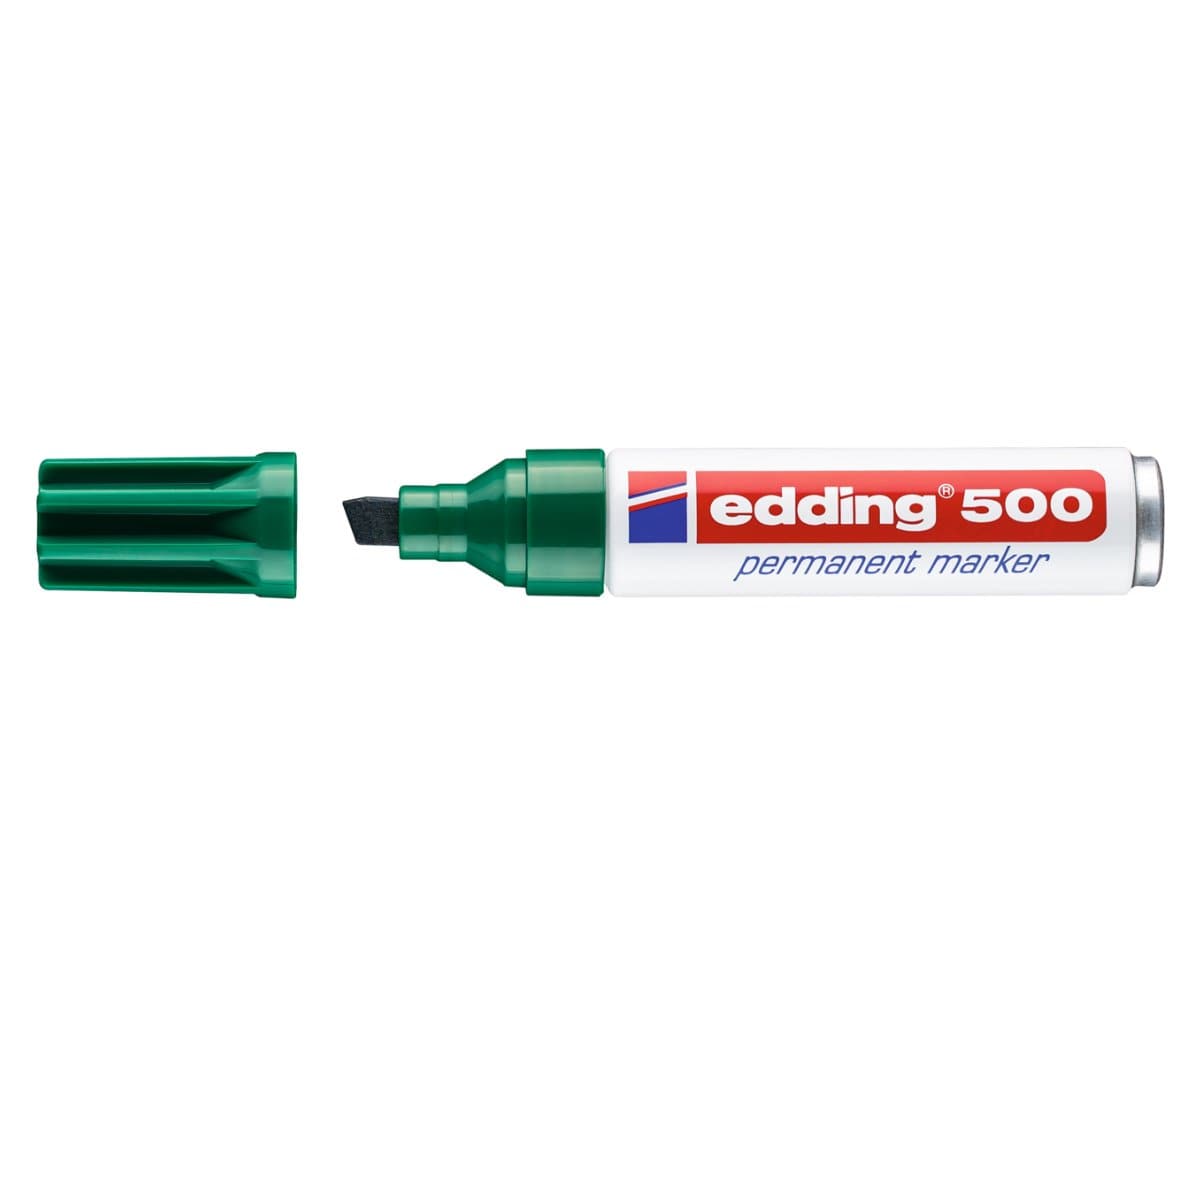 edding 500 Permanent Marker, 2-7mm Chisel Tip, Green